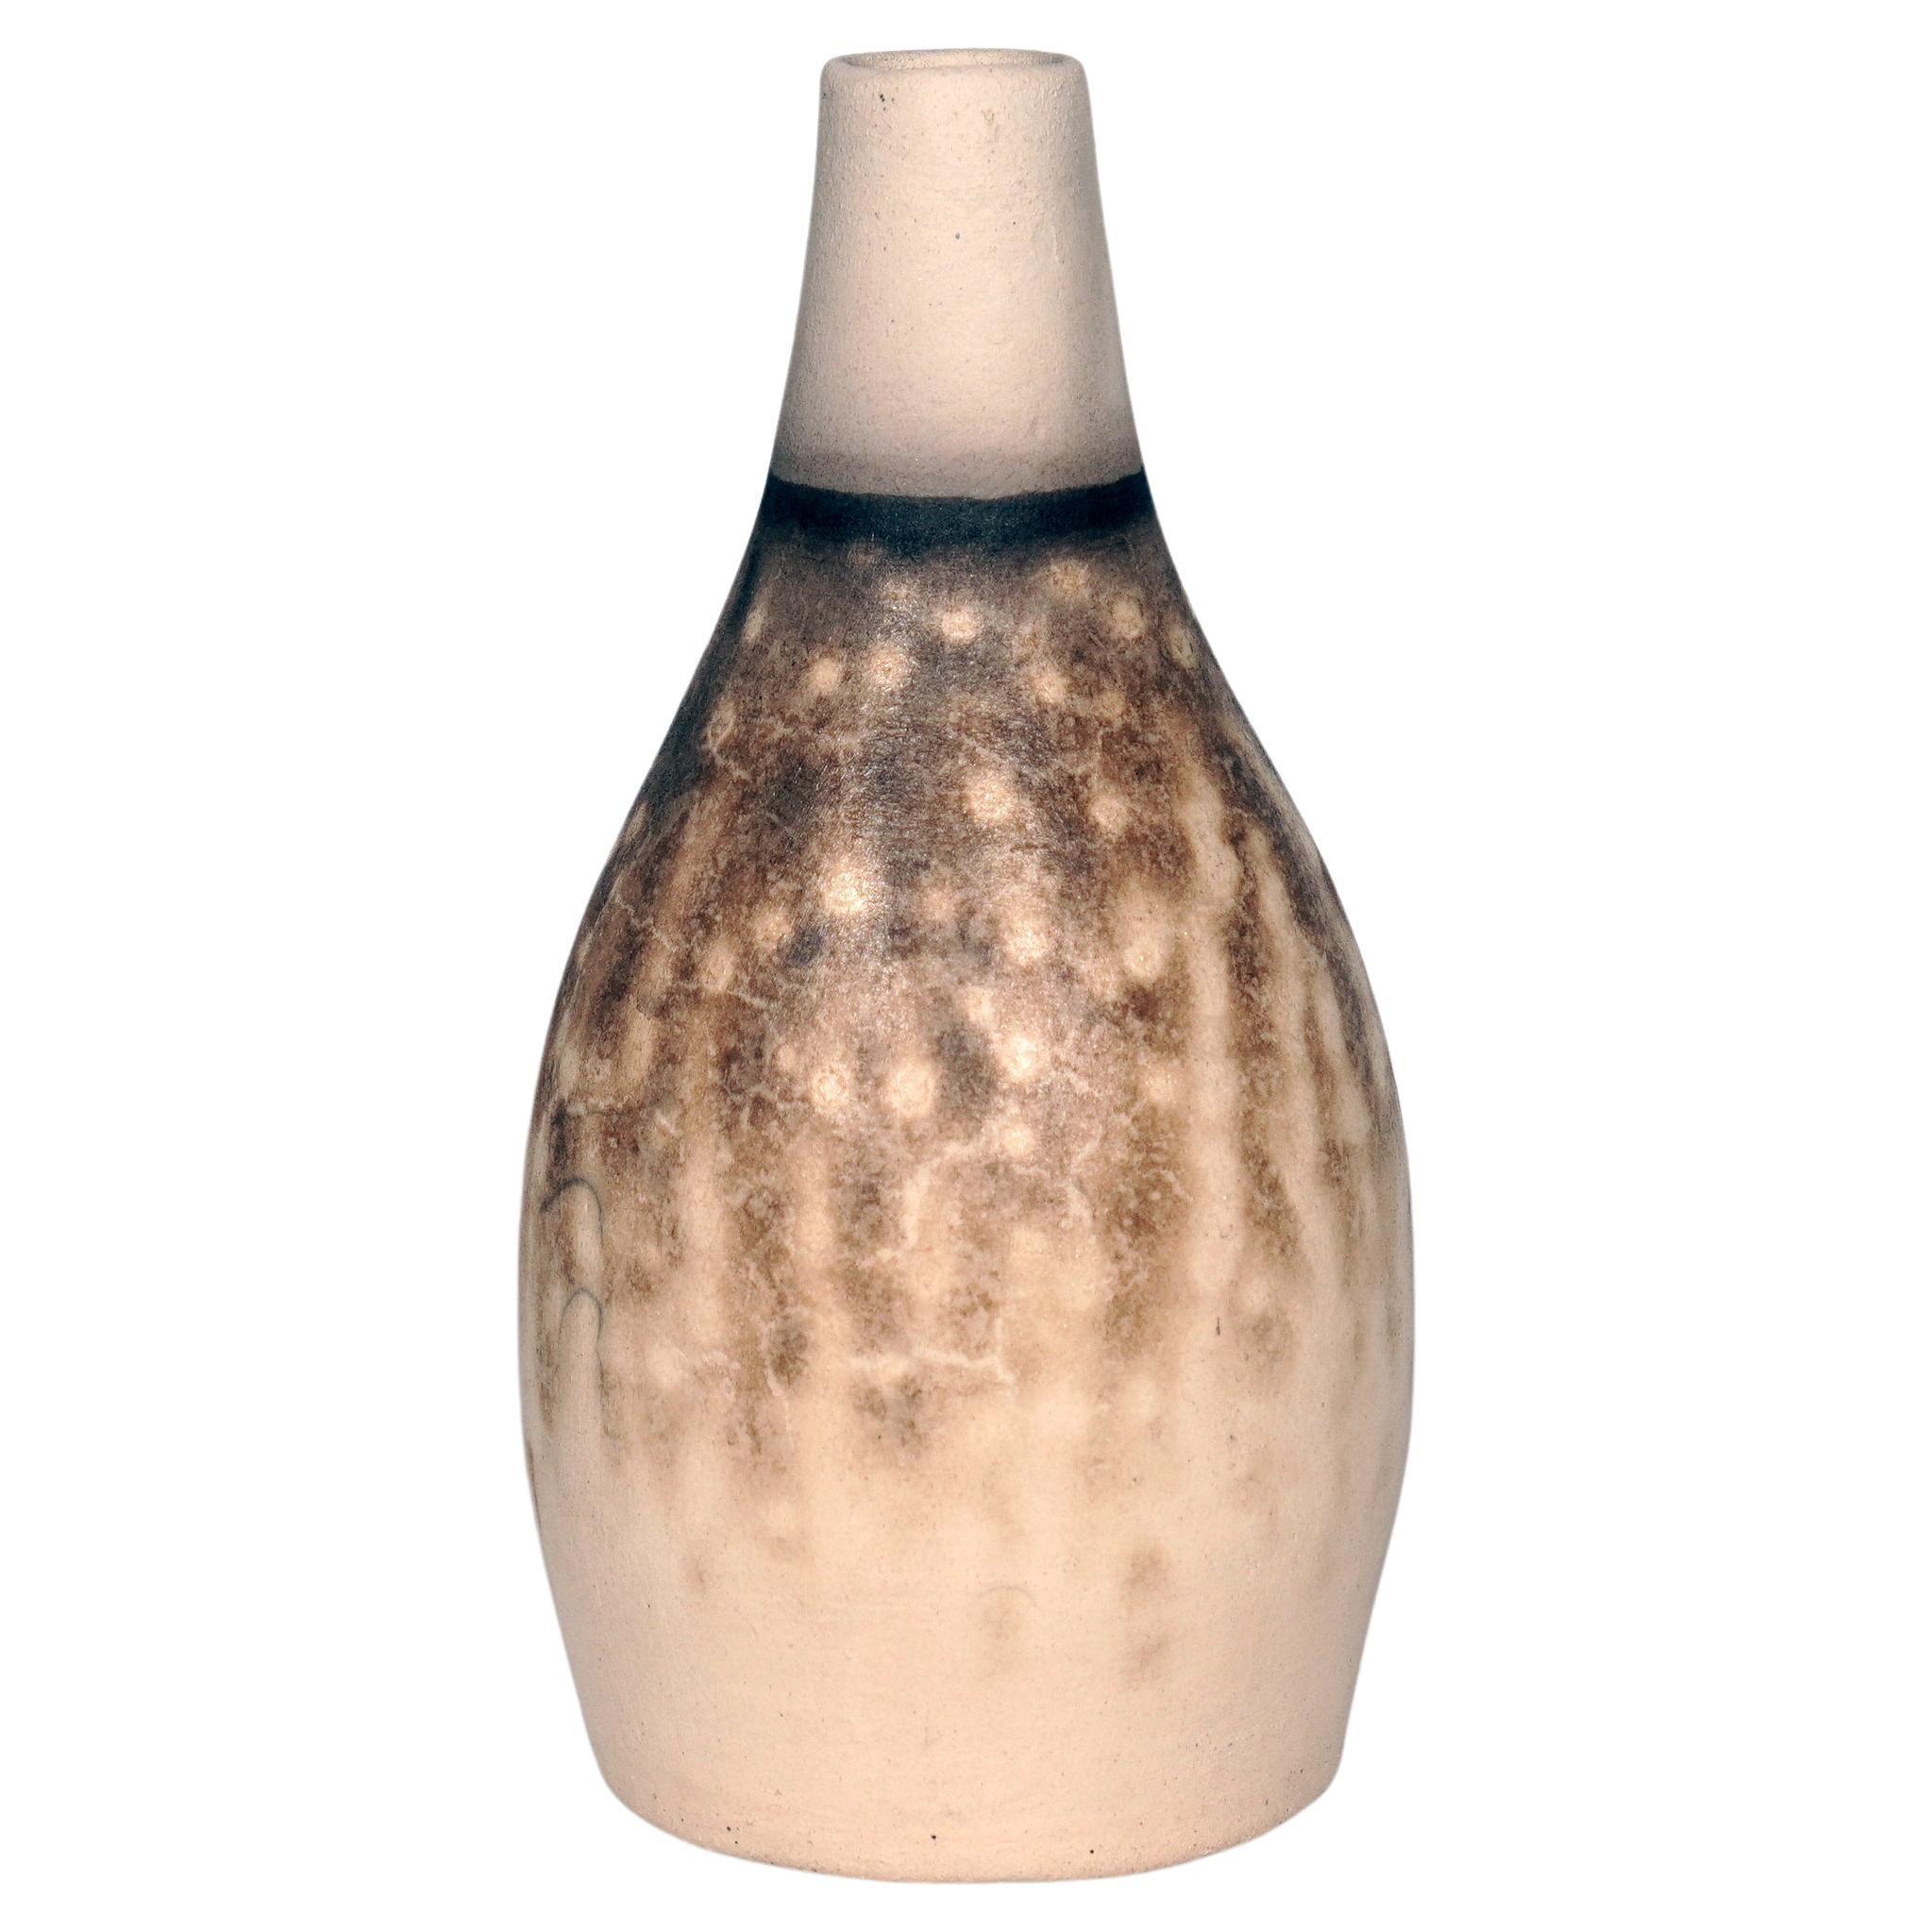 Natsu Raku Pottery Vase, Obvara, Handmade Ceramic Home Decor Gift